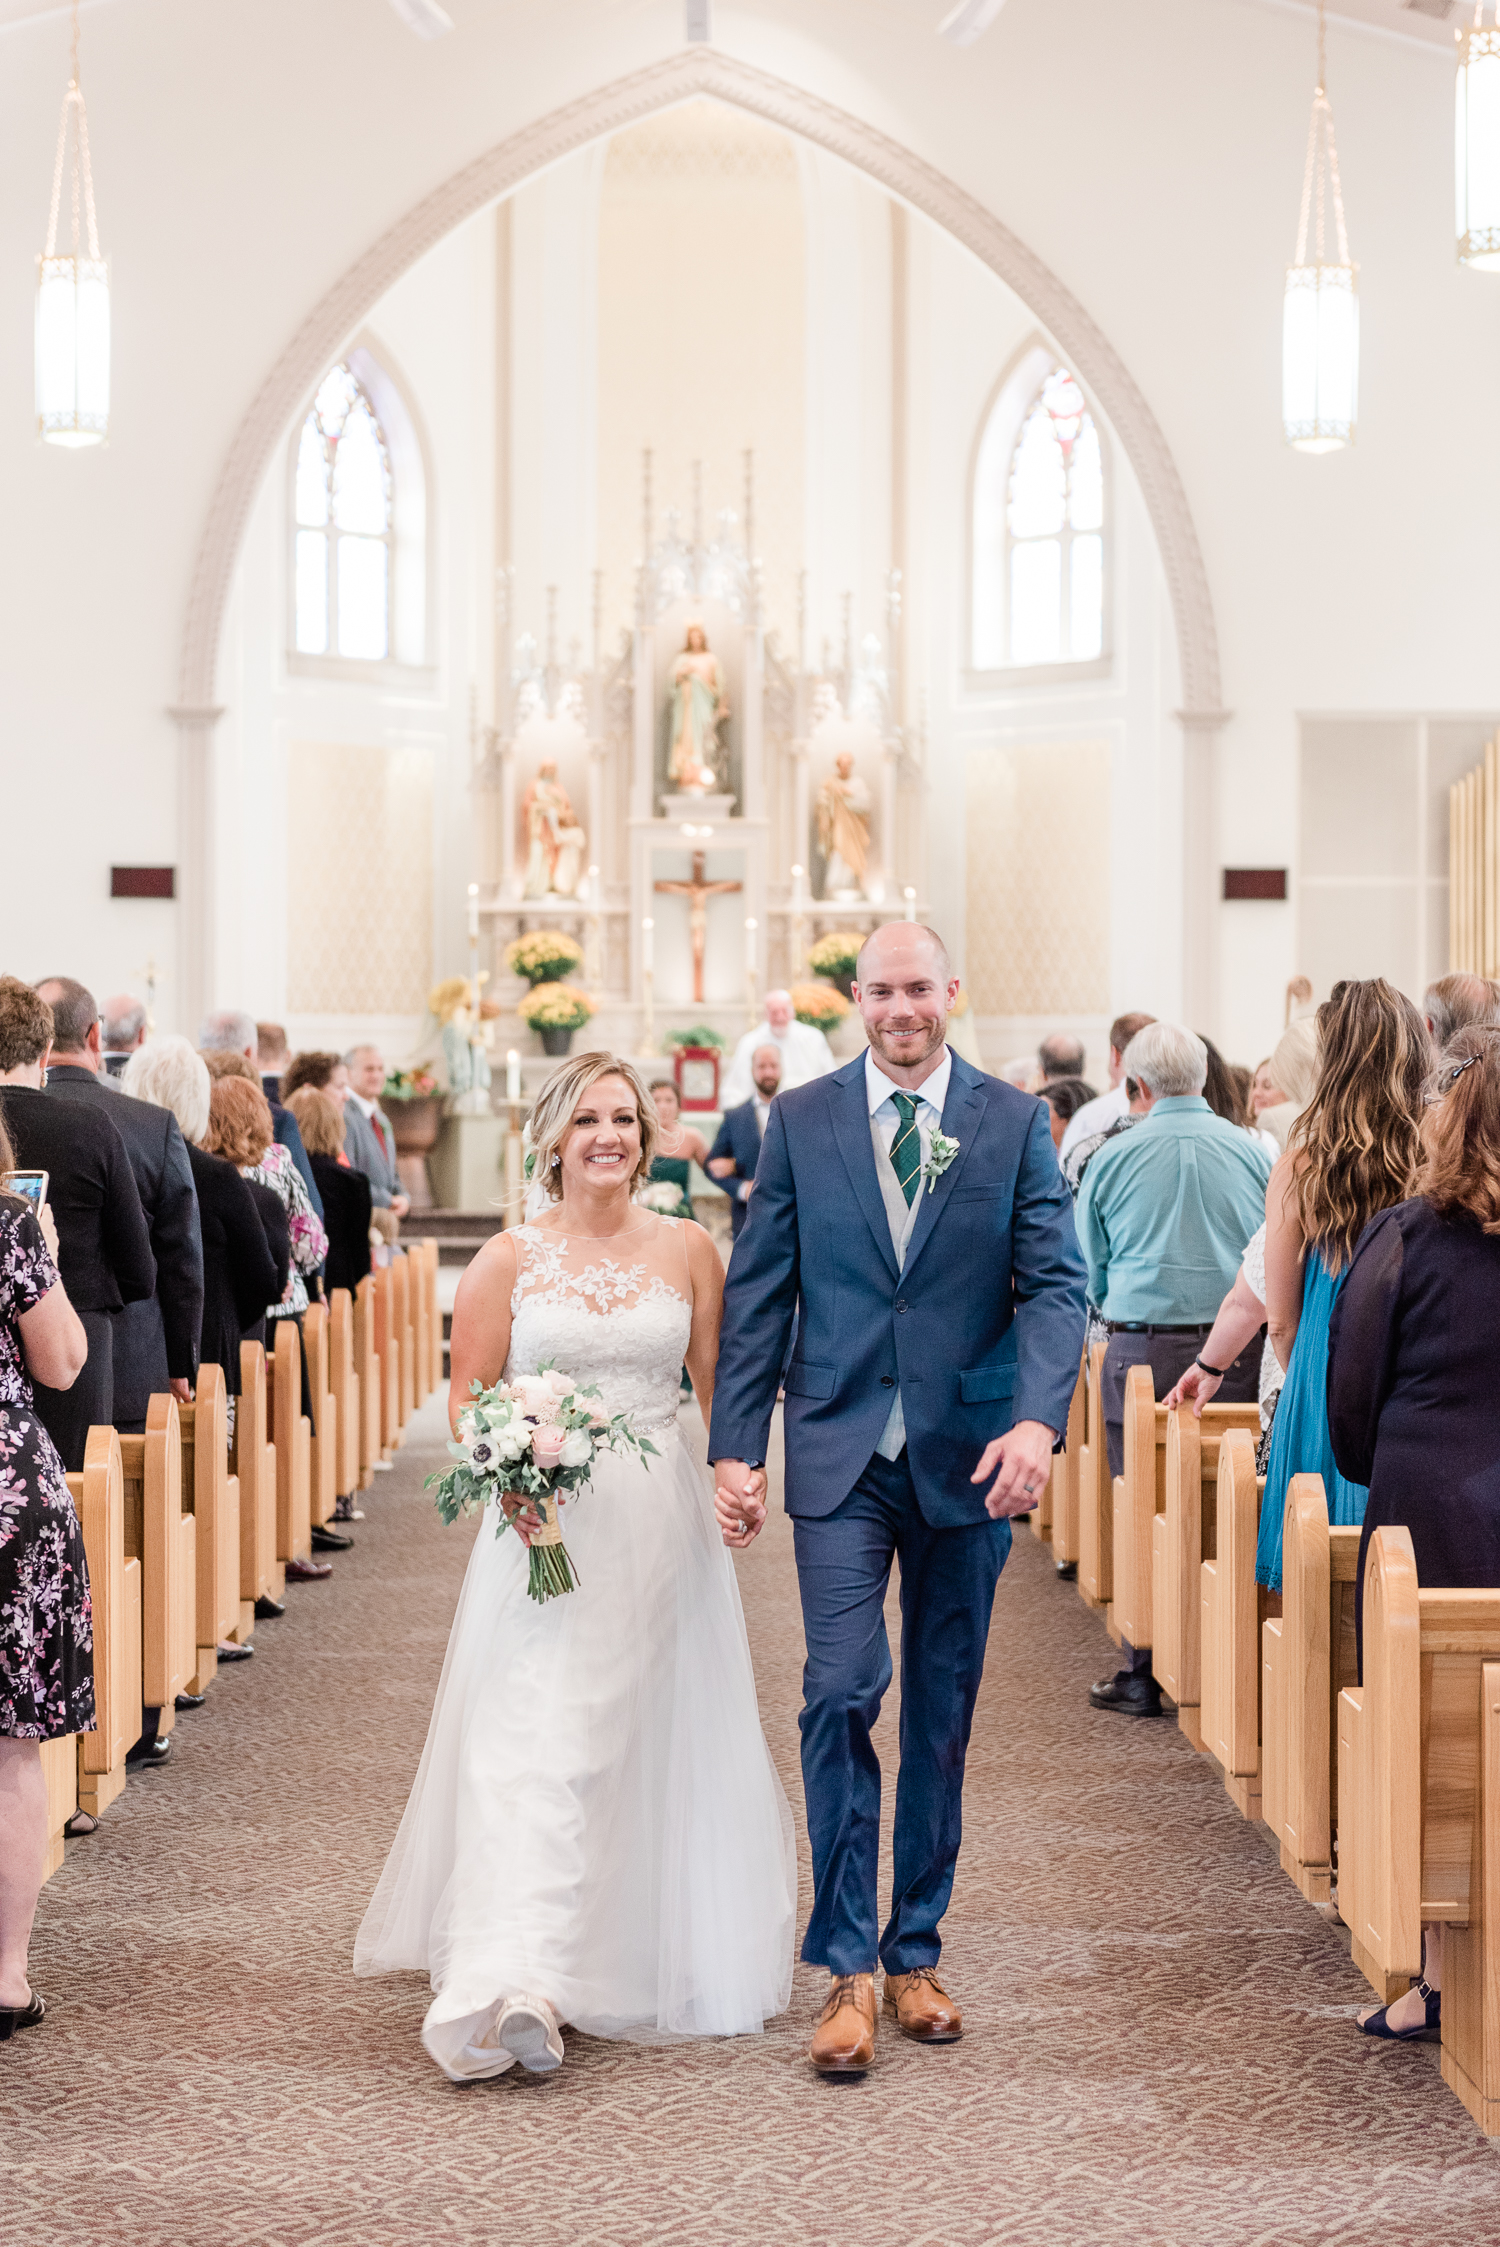 Newly married couple walks down the church aisle